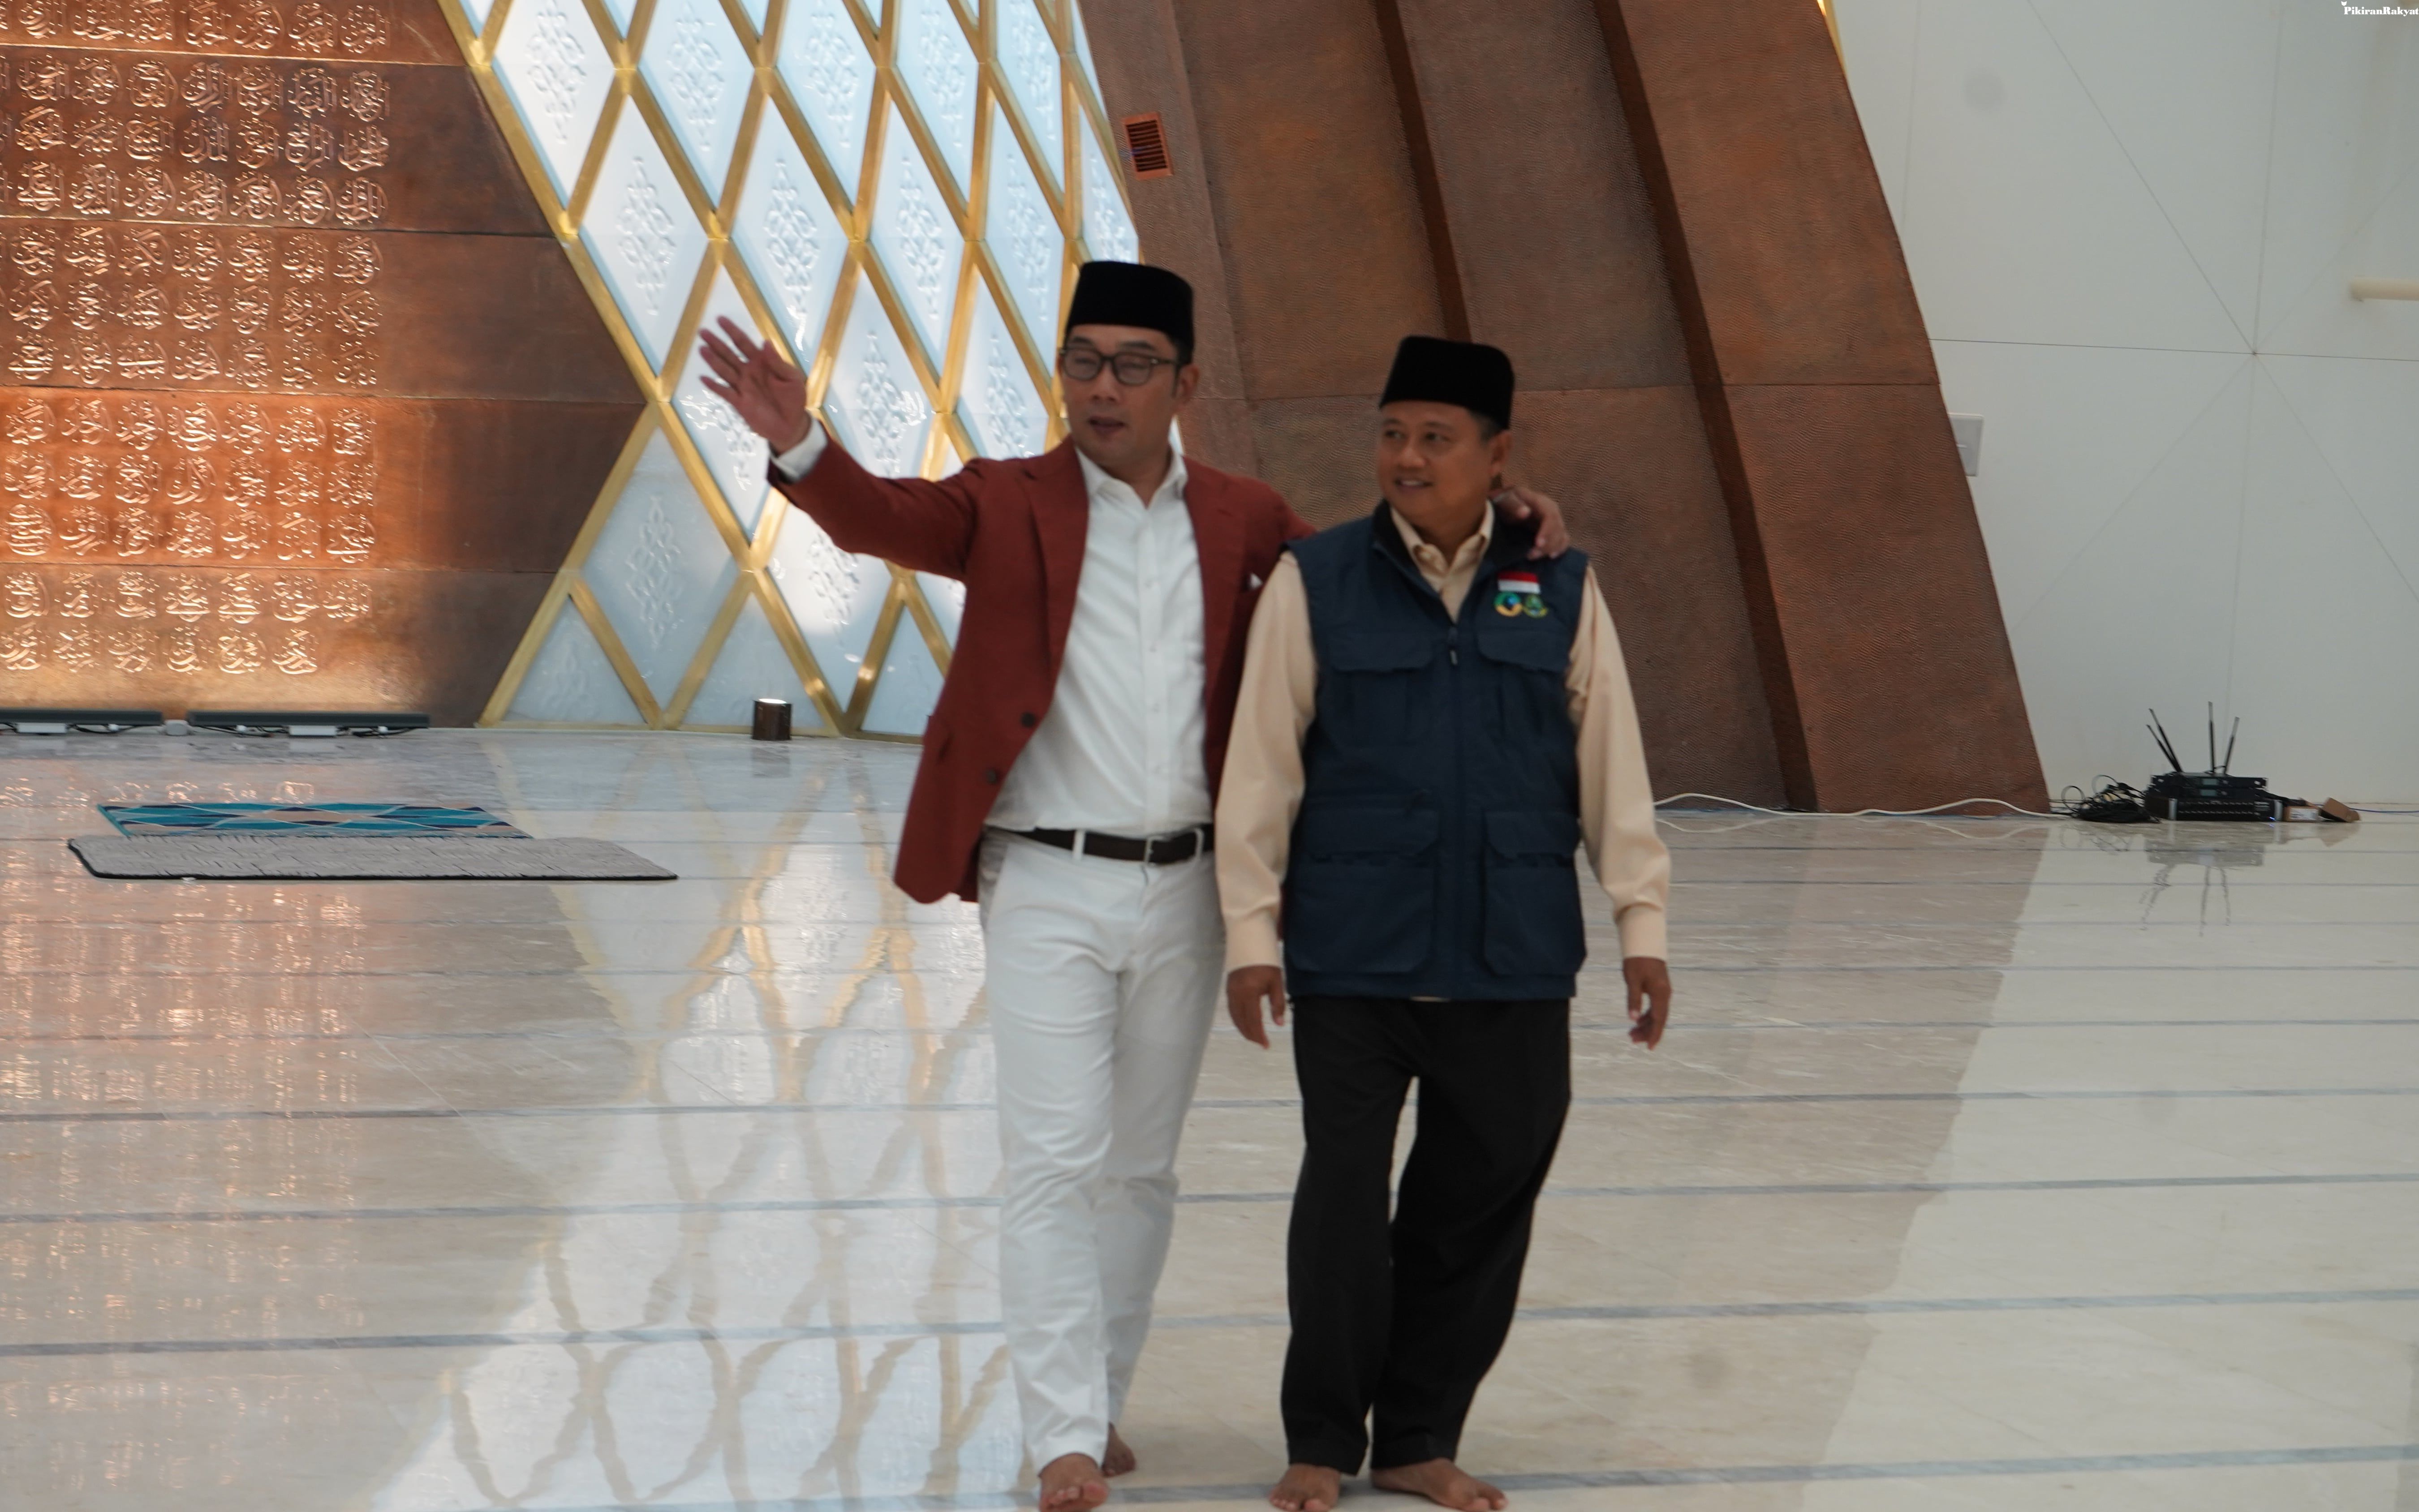 Gubernur Jawa Barat Ridwan Kamil dan Wakil Gubernur Jawa Barat Uu Ruzhanul Ulum di Masjid Raya Al Jabbar, Gedebage, Bandung, Senin 26 Desember 2022. Masjid ini akan diresmikan pada Jumat 30 Desember 2022.